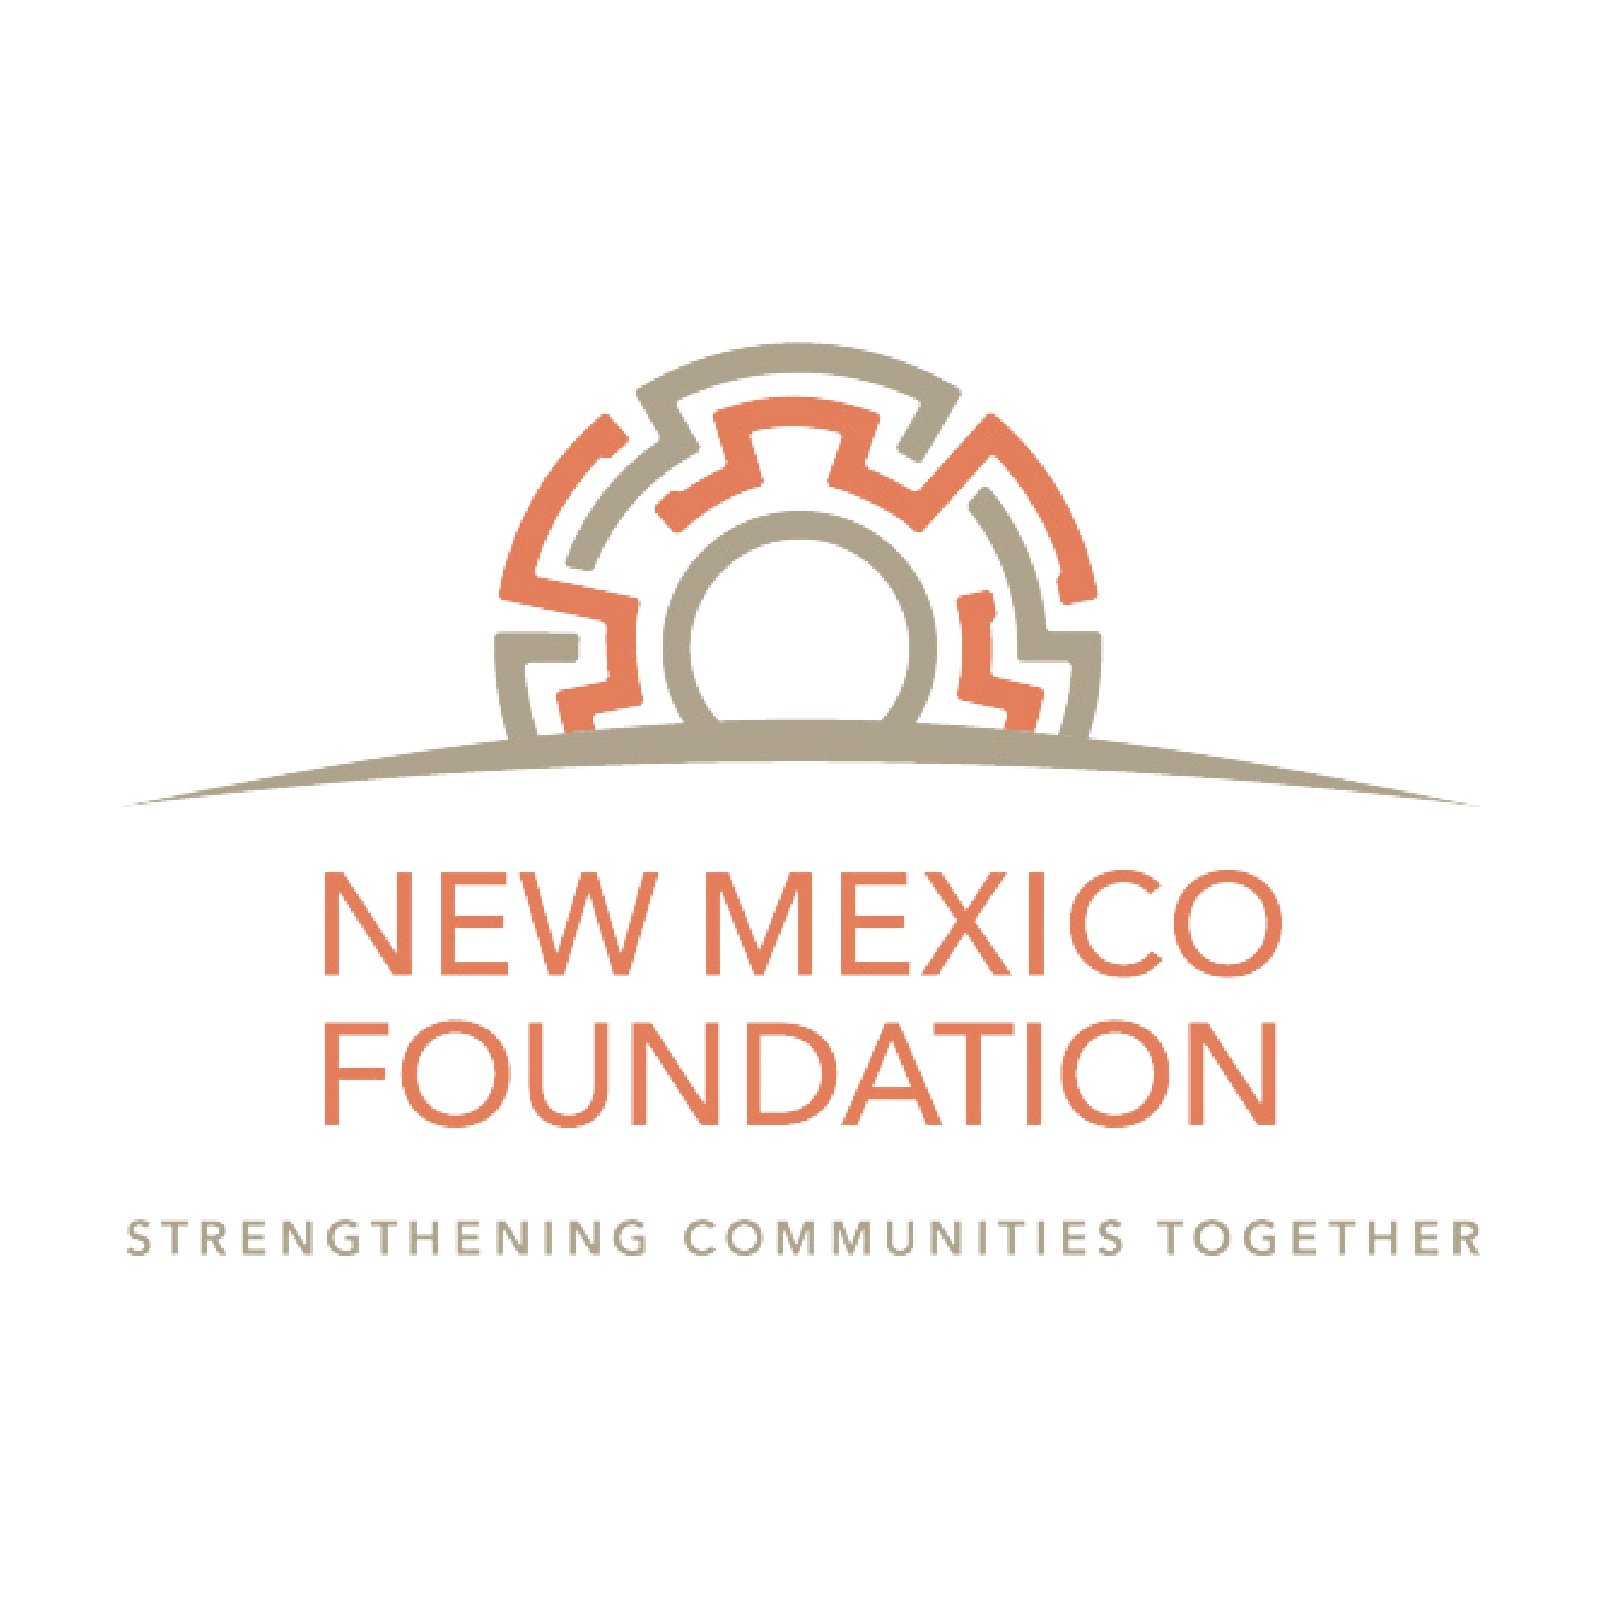 NM Foundation logo.jpg